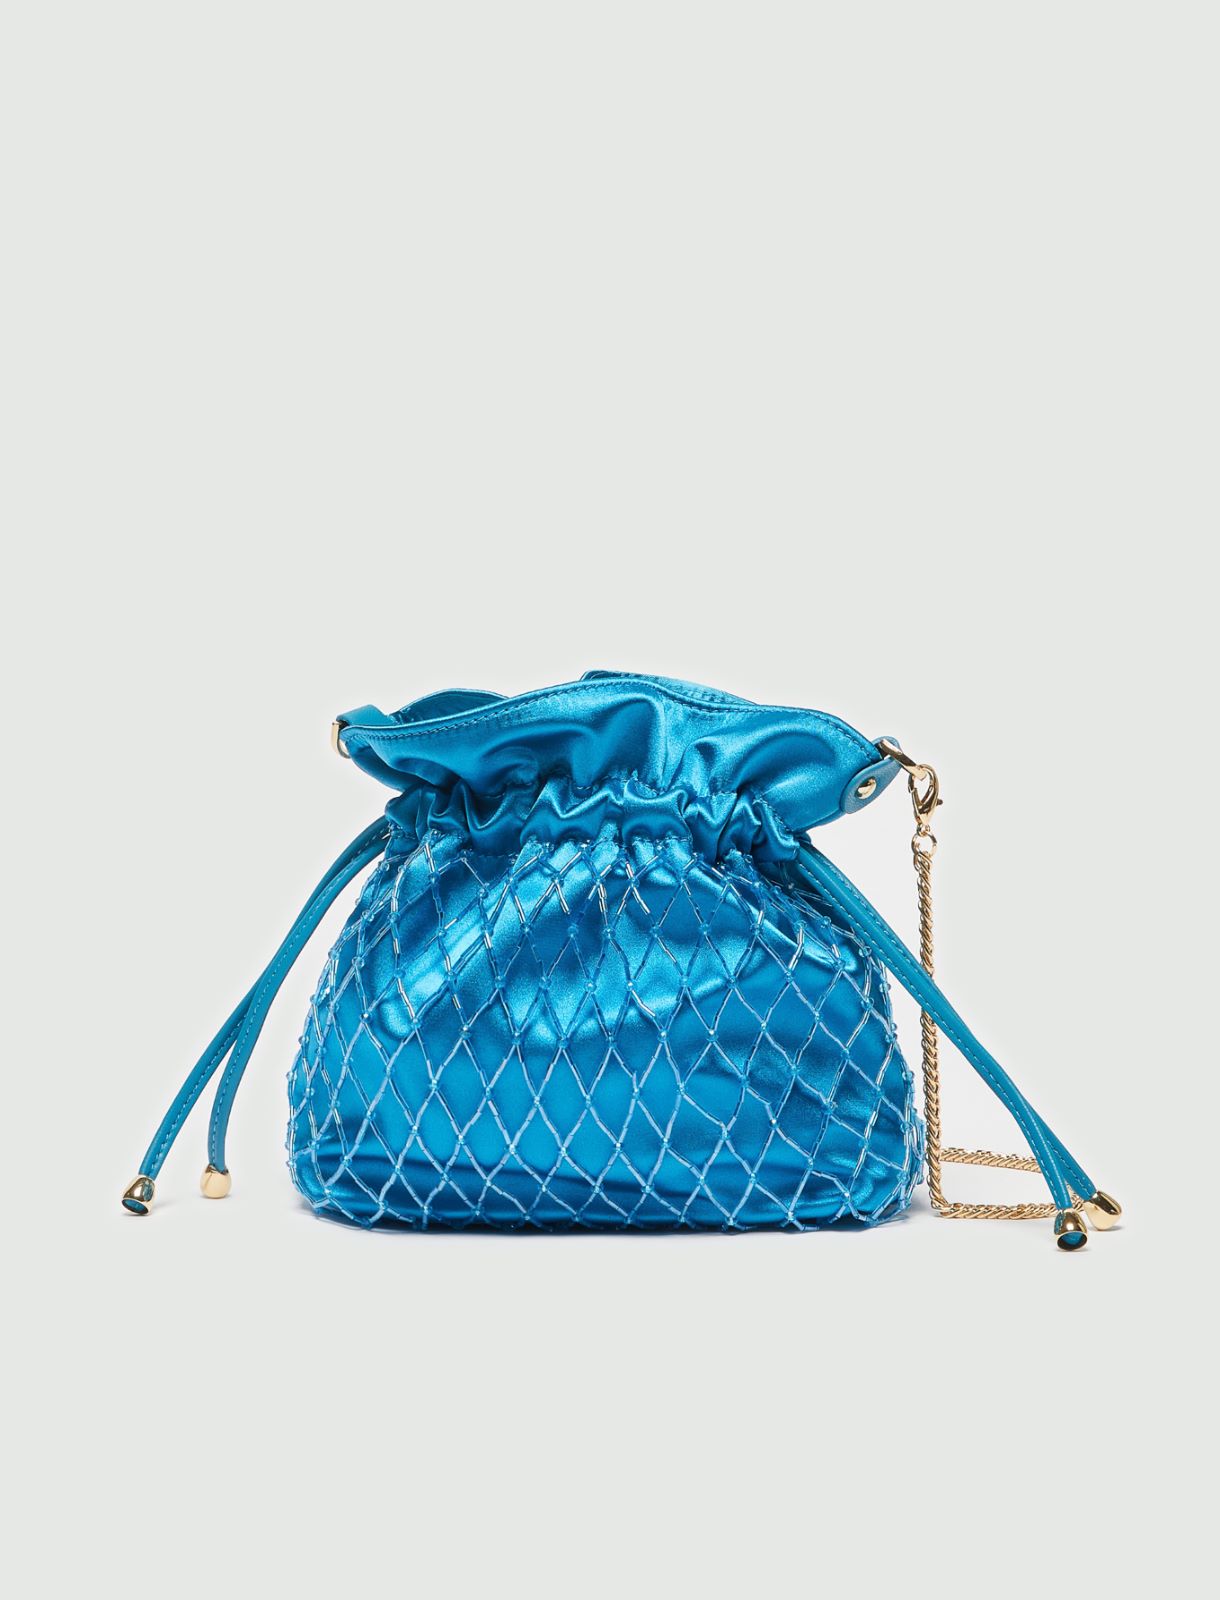 Mesh bag - Turquoise - Marina Rinaldi - 2